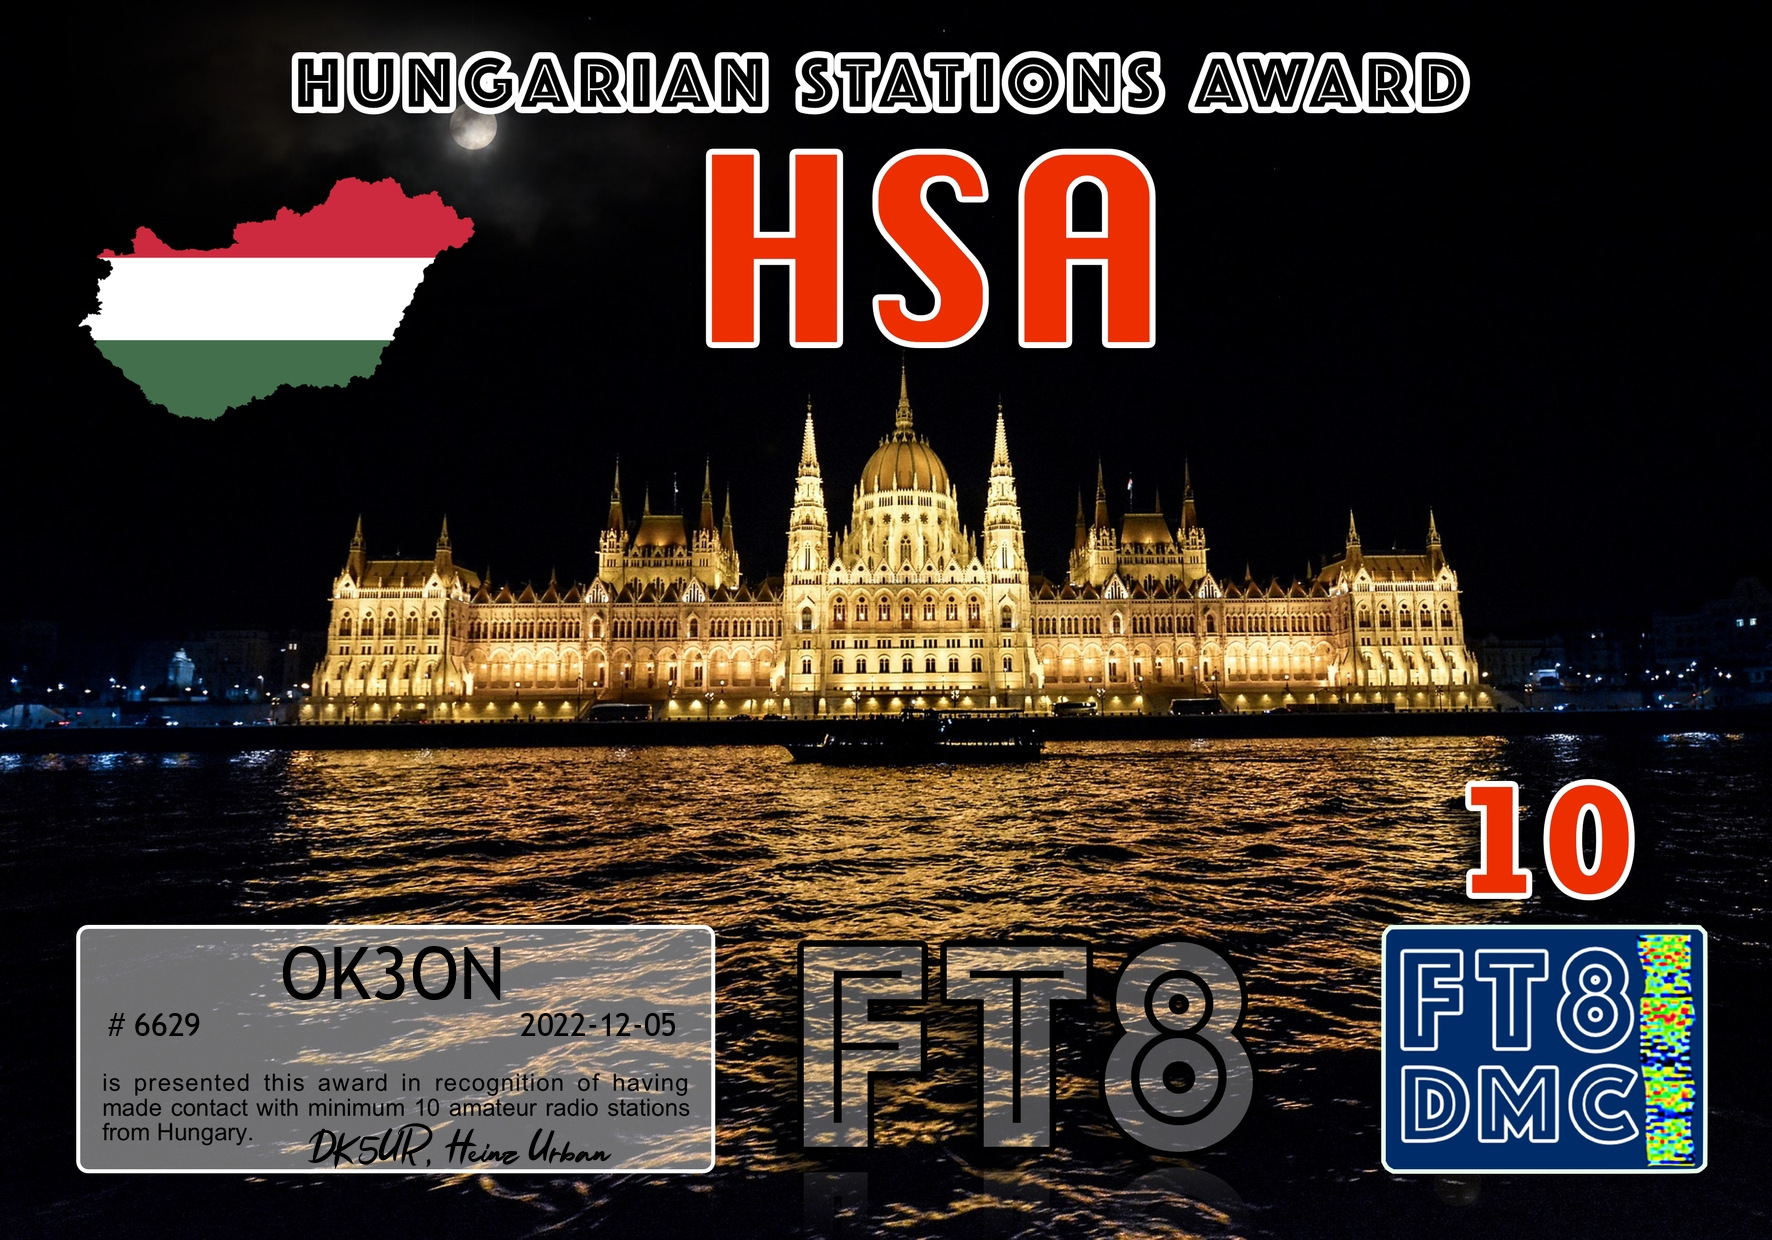 awards/OK3ON-HSA-III_FT8DMC.jpg